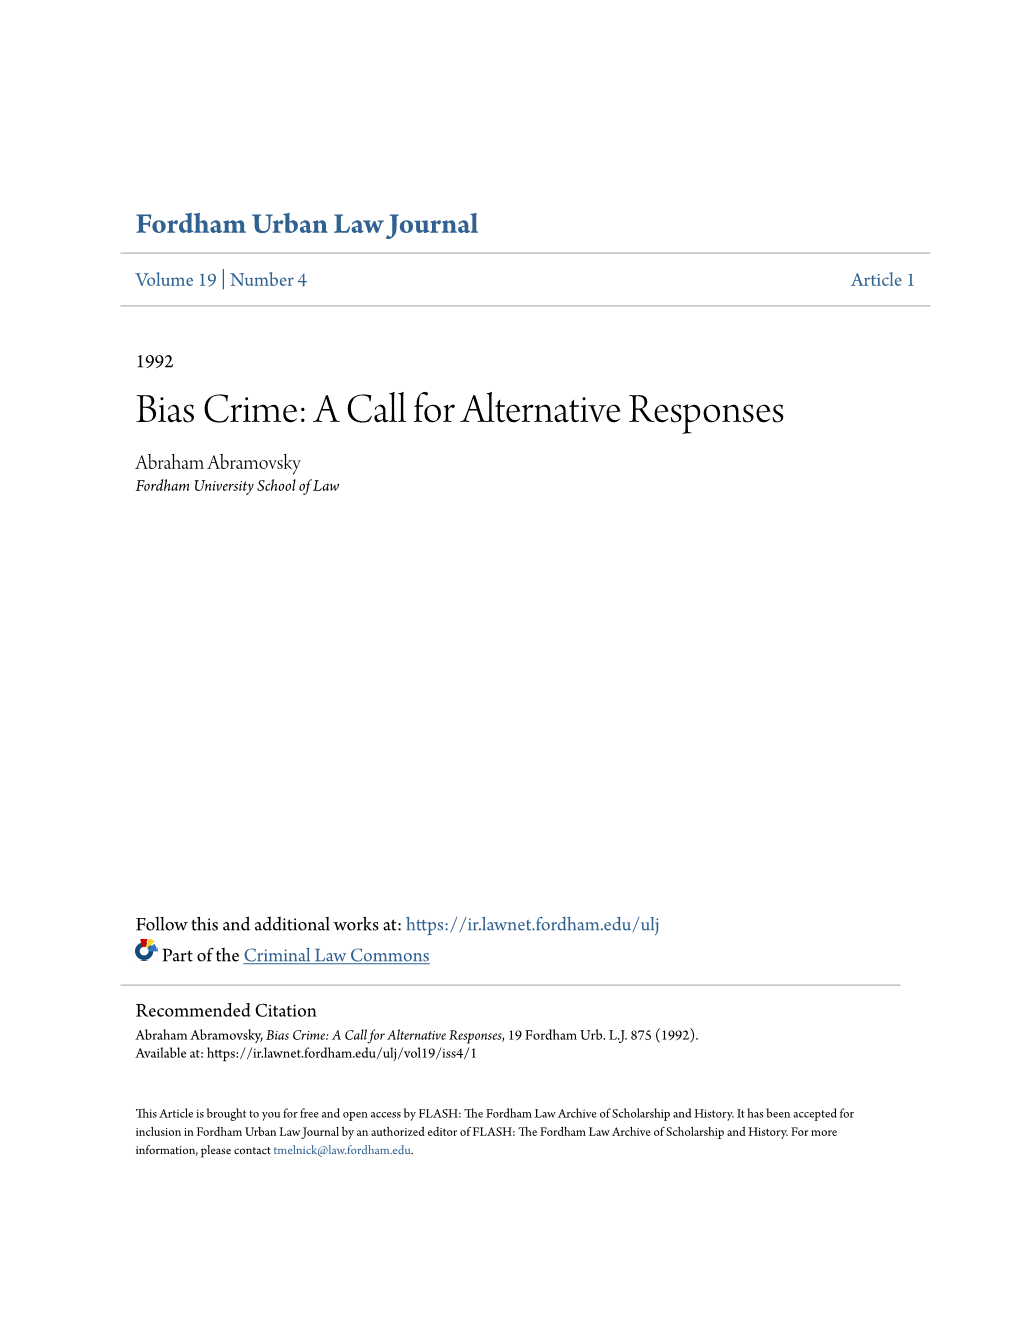 Bias Crime: a Call for Alternative Responses Abraham Abramovsky Fordham University School of Law